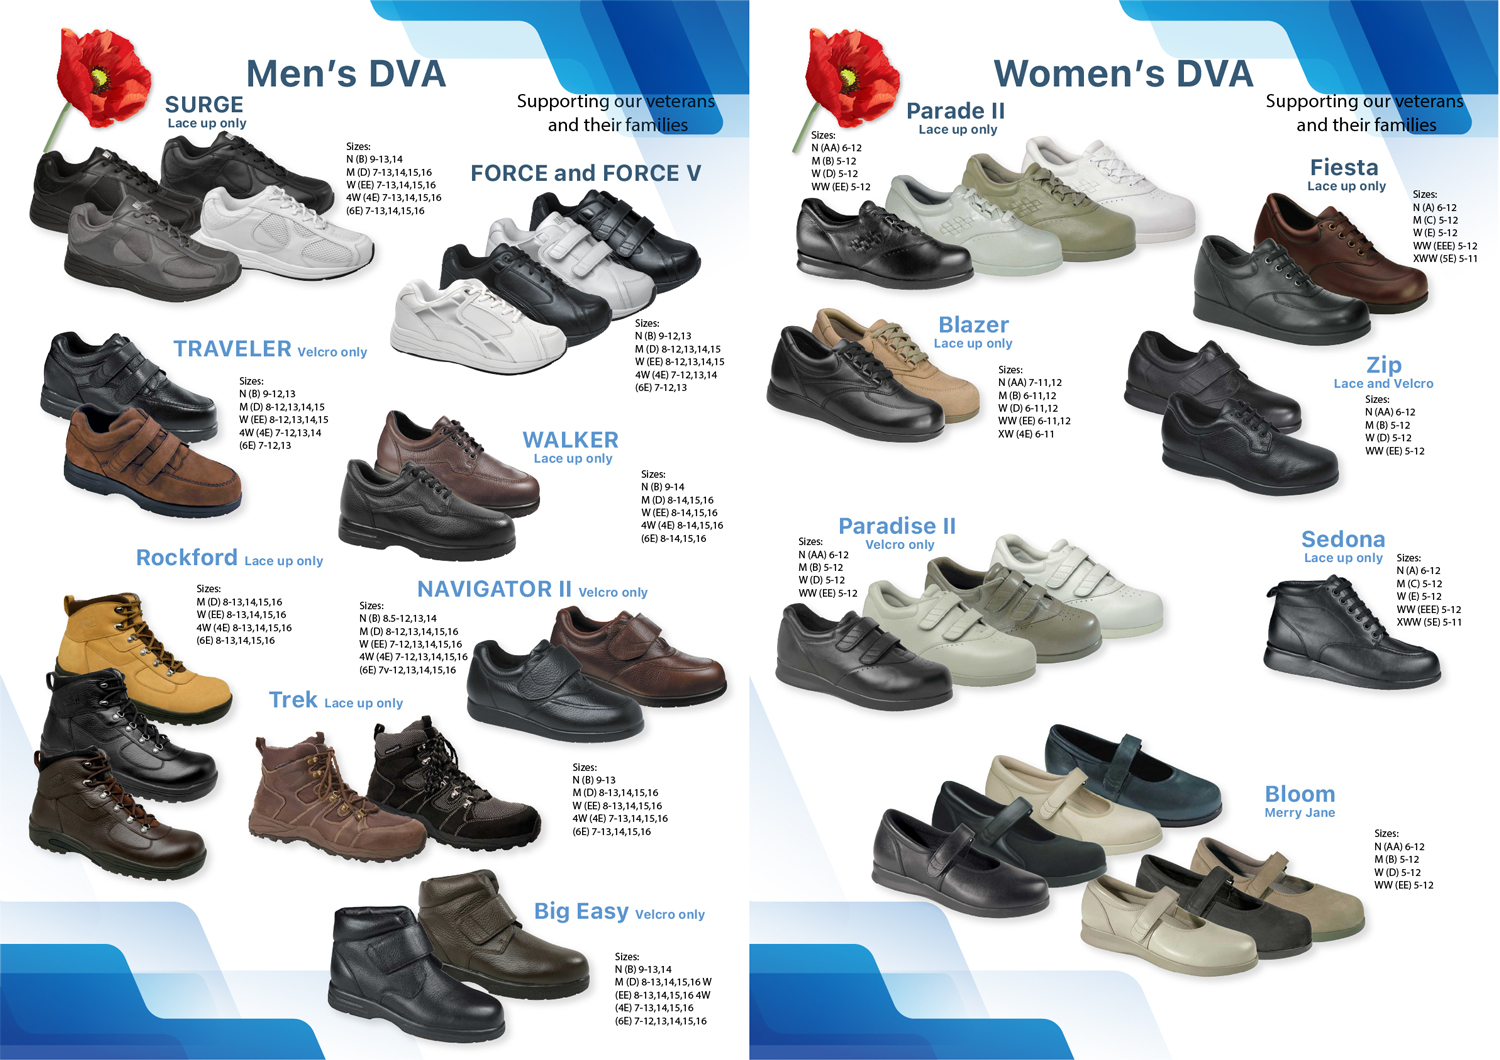 DVA Footwear